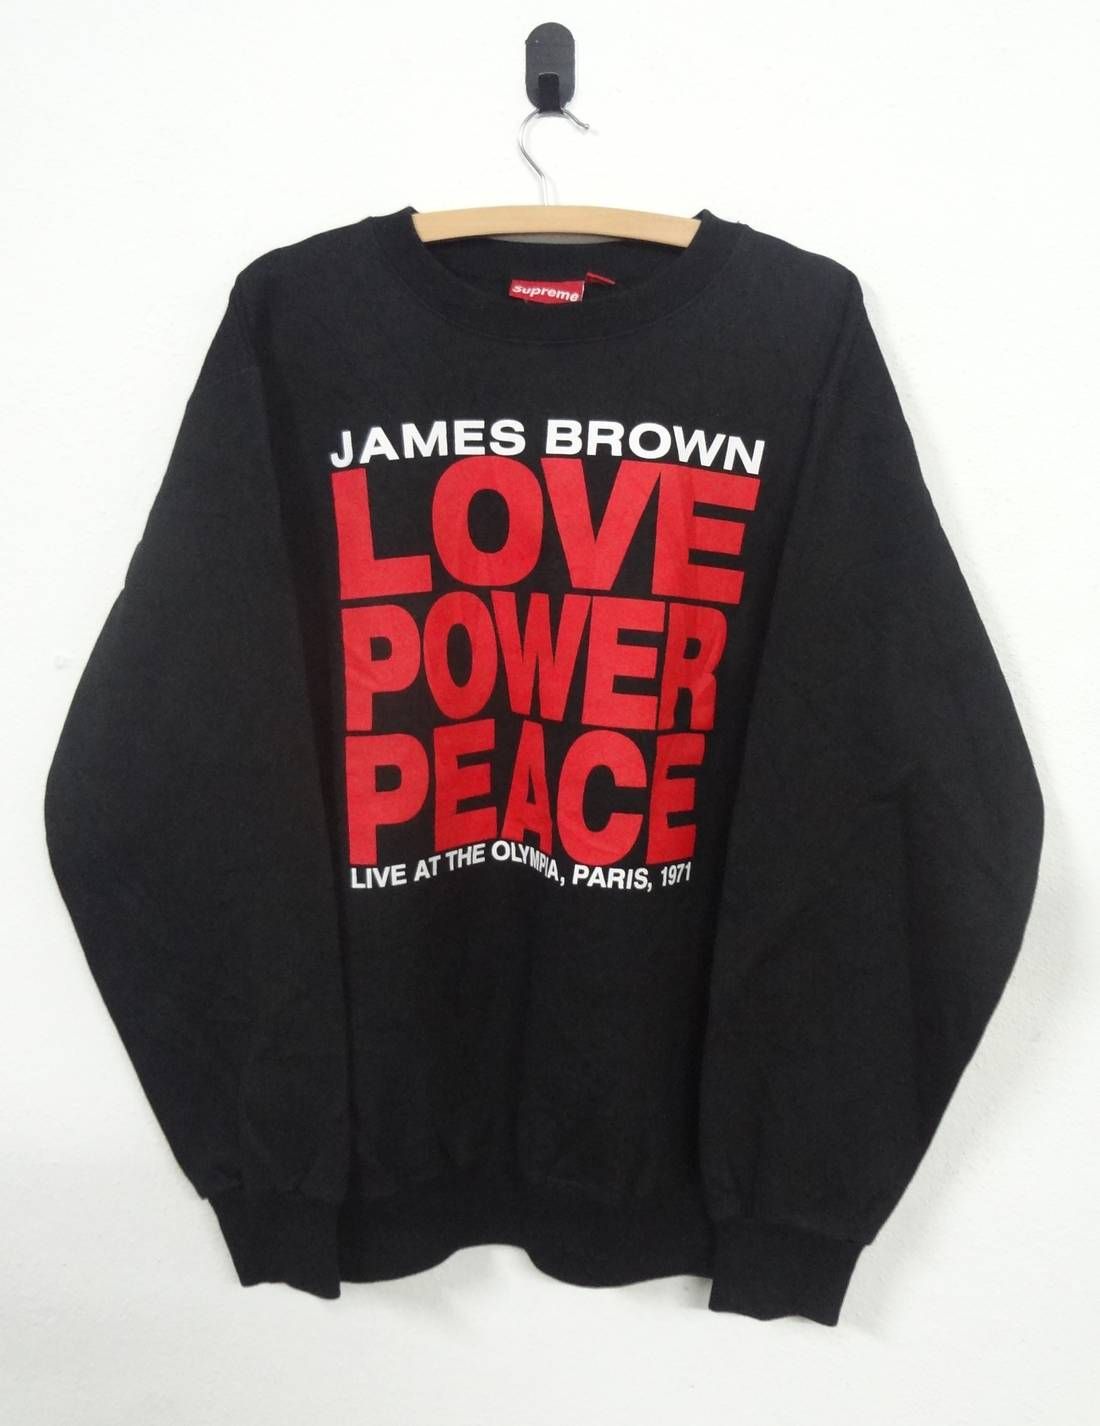 Supreme Supreme x James Brown Love power peace | Grailed